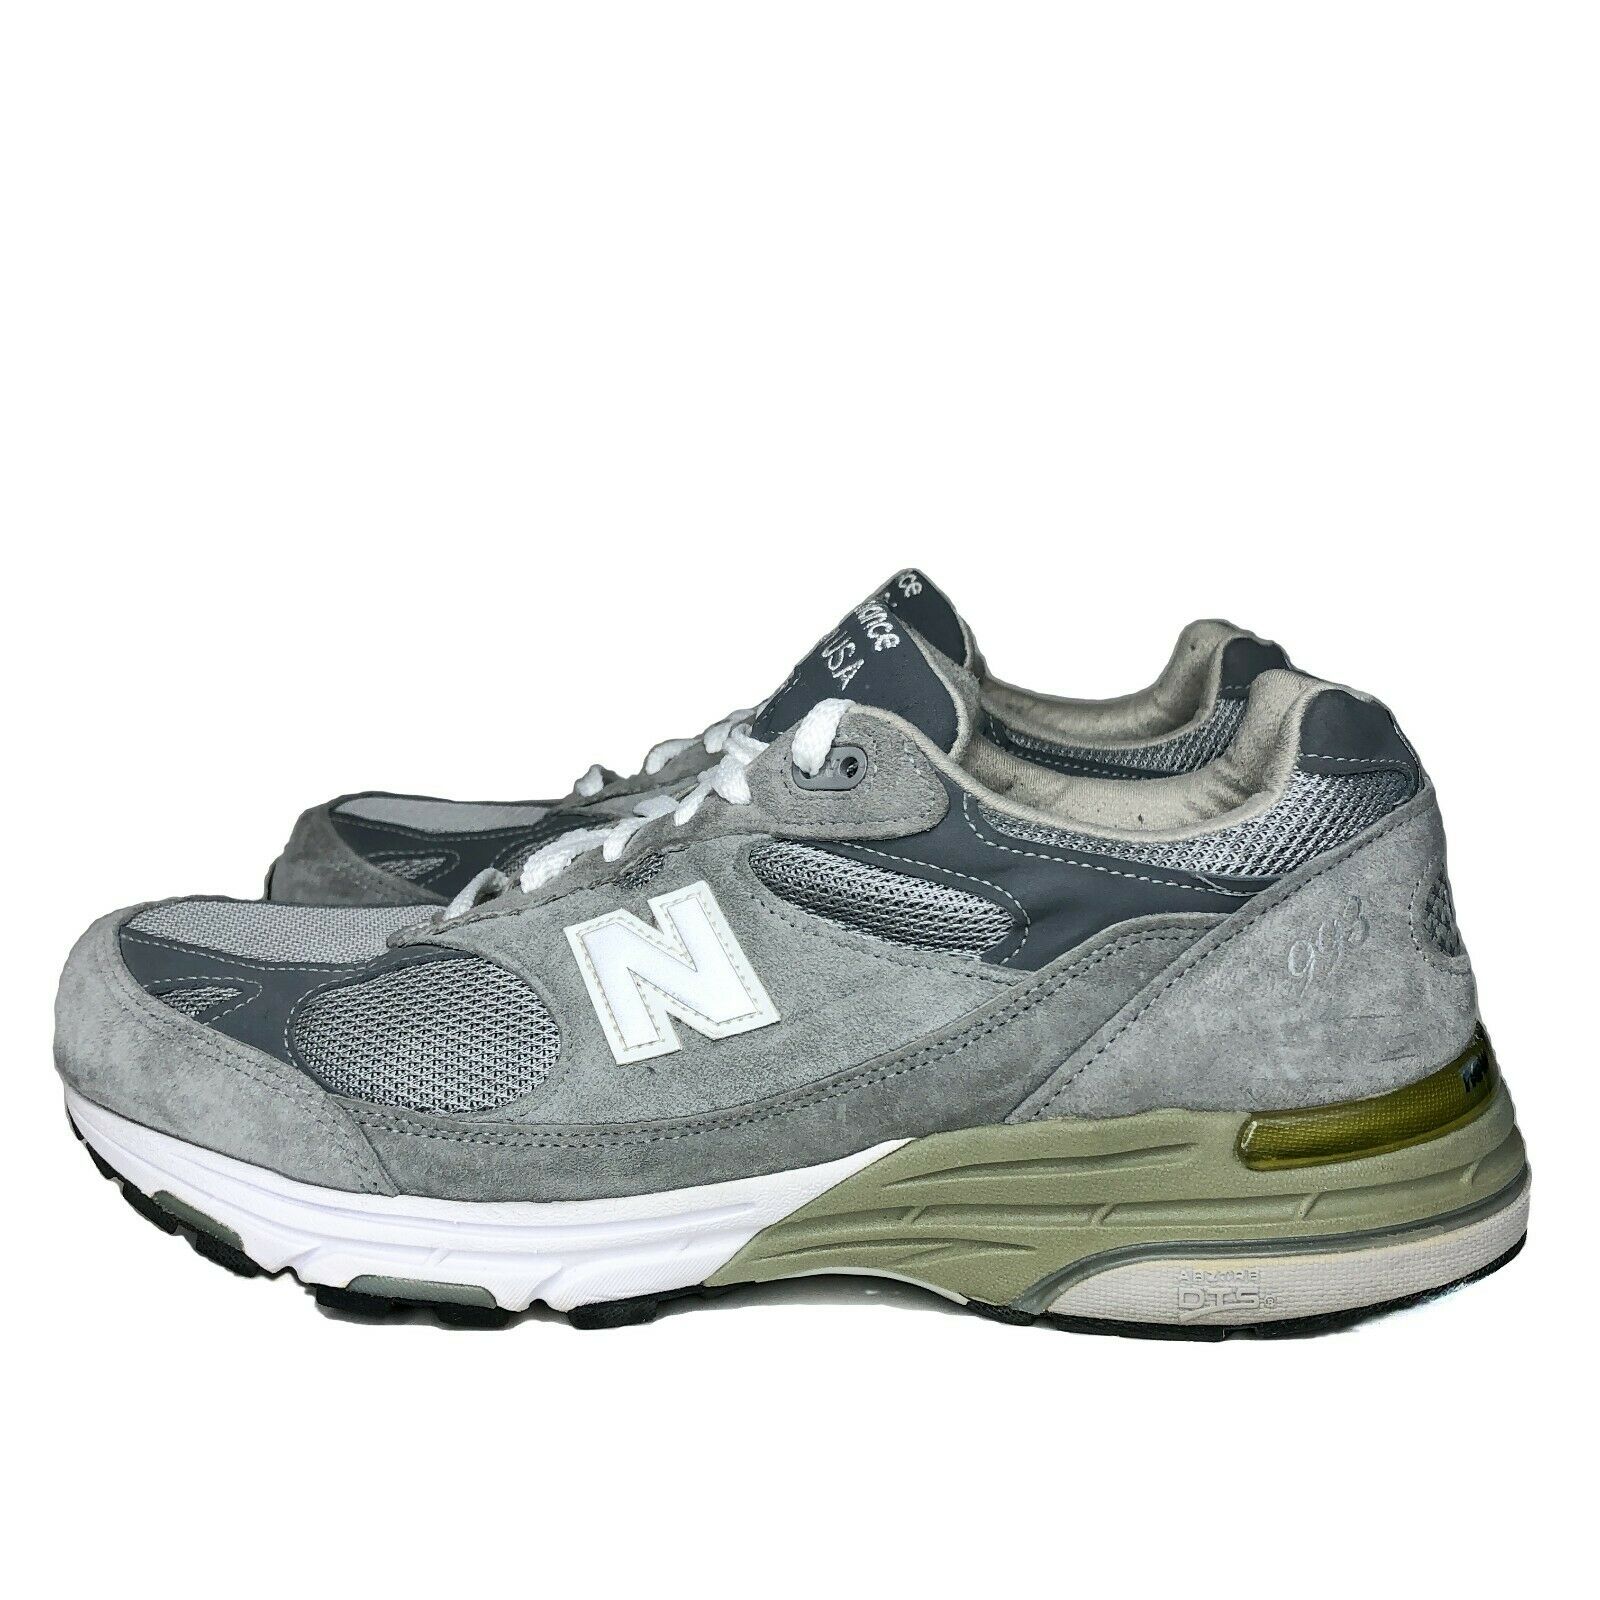 New Balance 993 USA Made Gray Running Walking Shoes Men Size 9.5 4E MR993GL